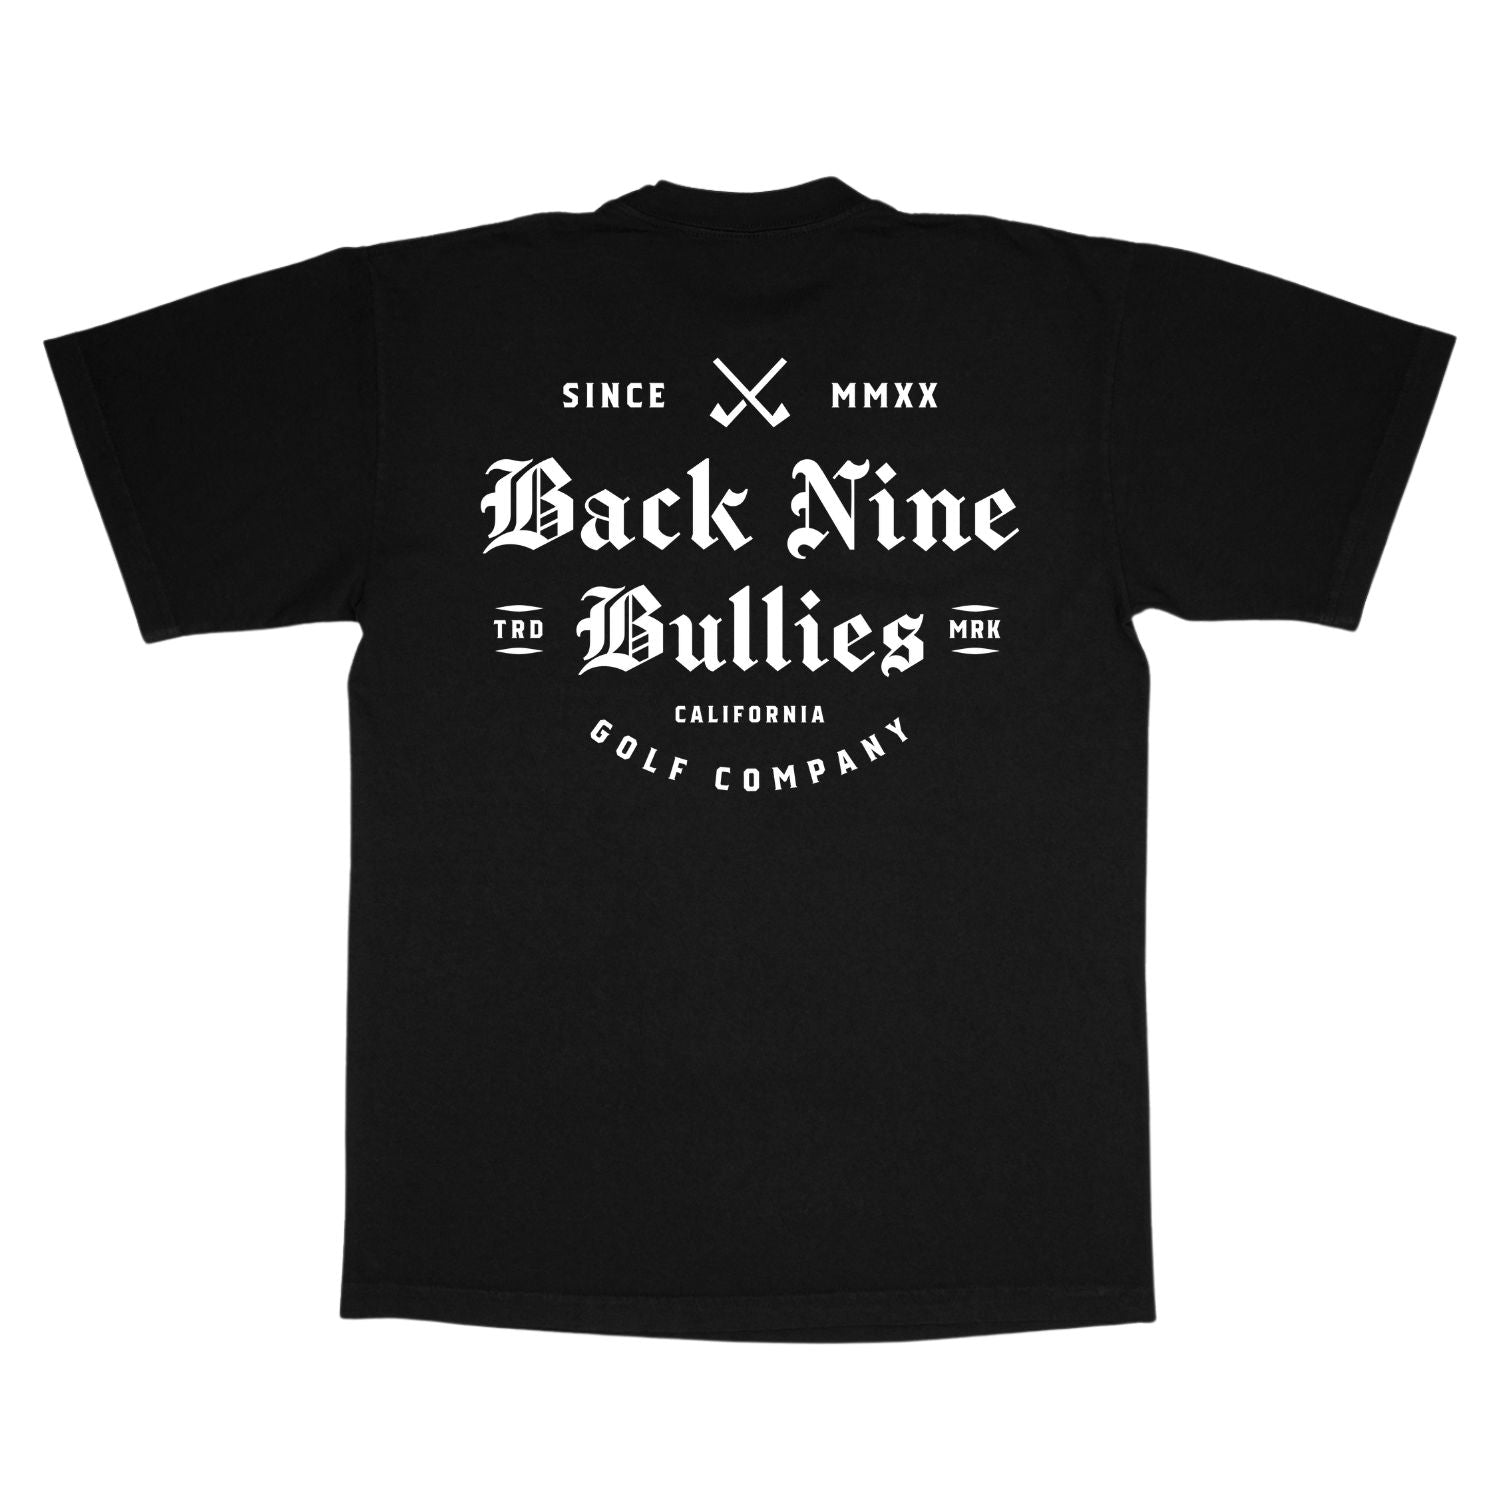 Trademark T-shirt  Back Nine Bullies Golf Co.